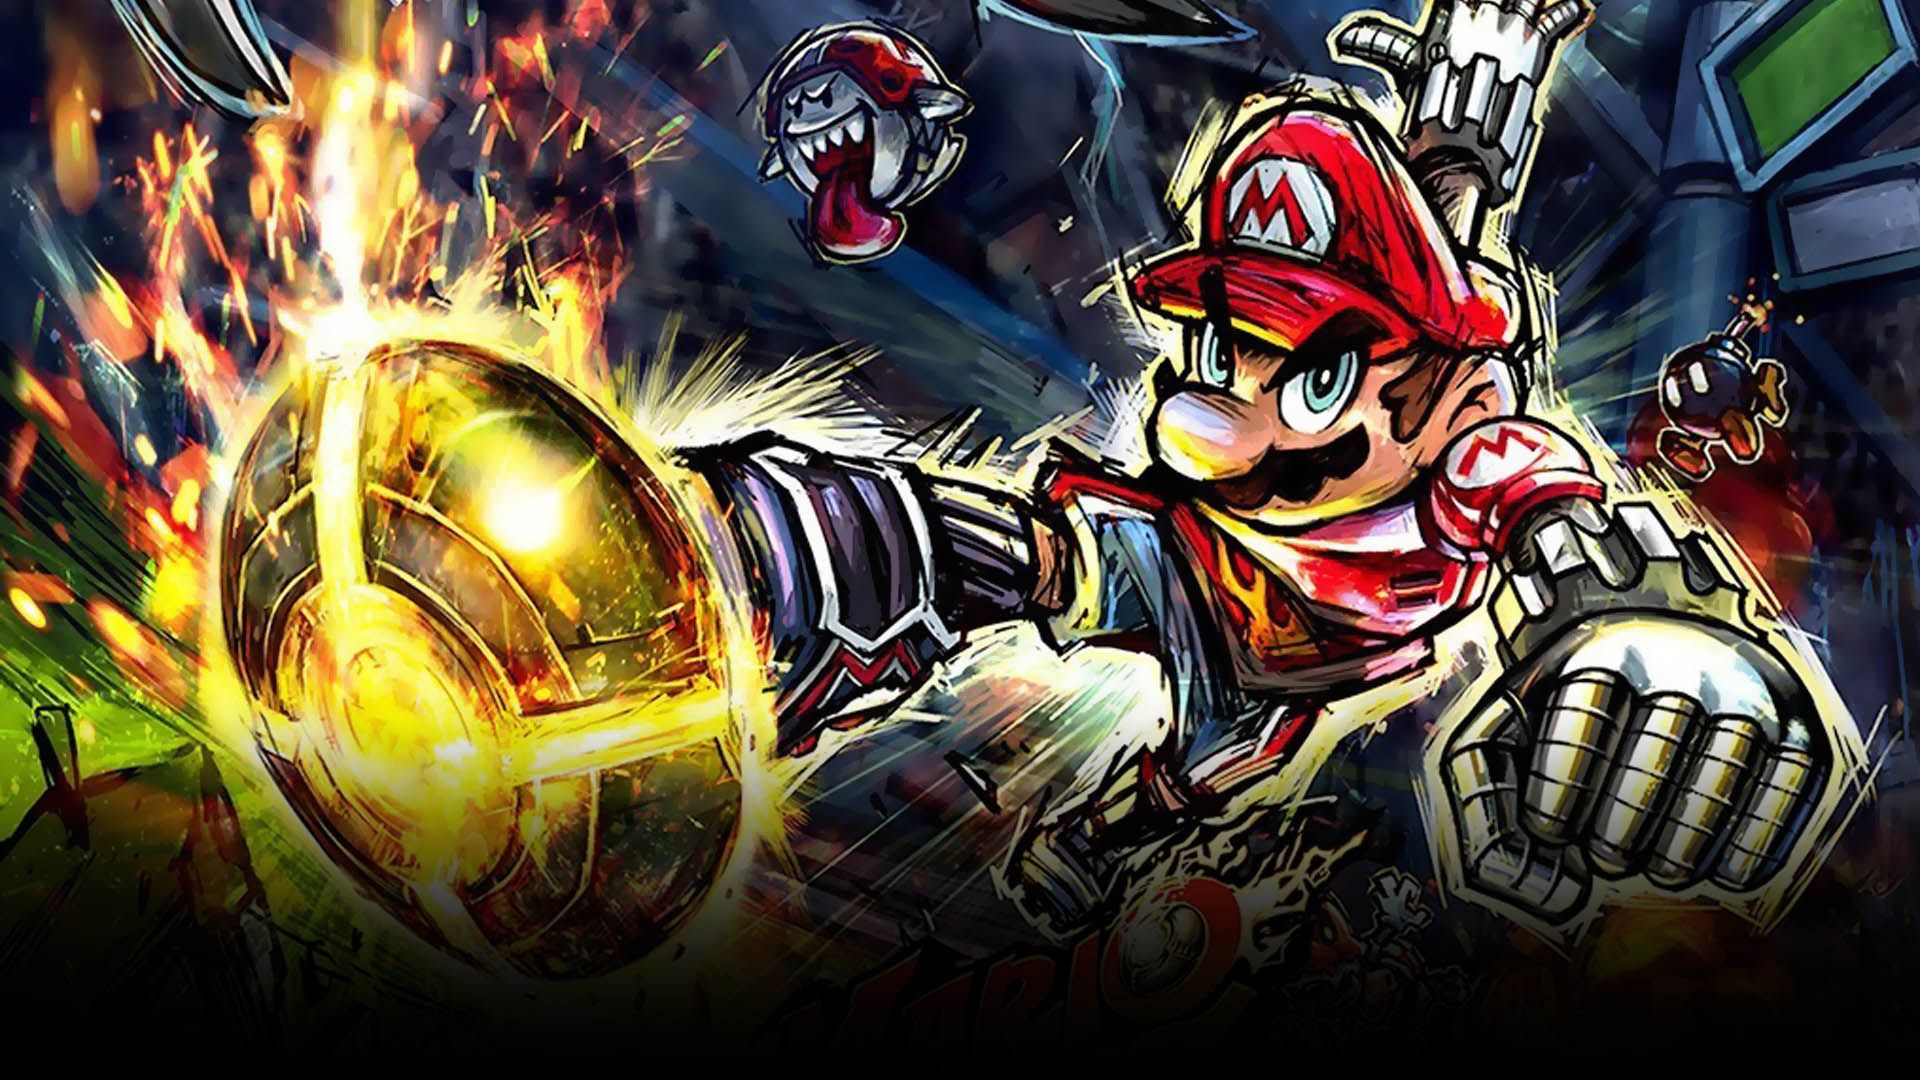 Mario Strikers Charged kicking onto Wii U Virtual Consoles